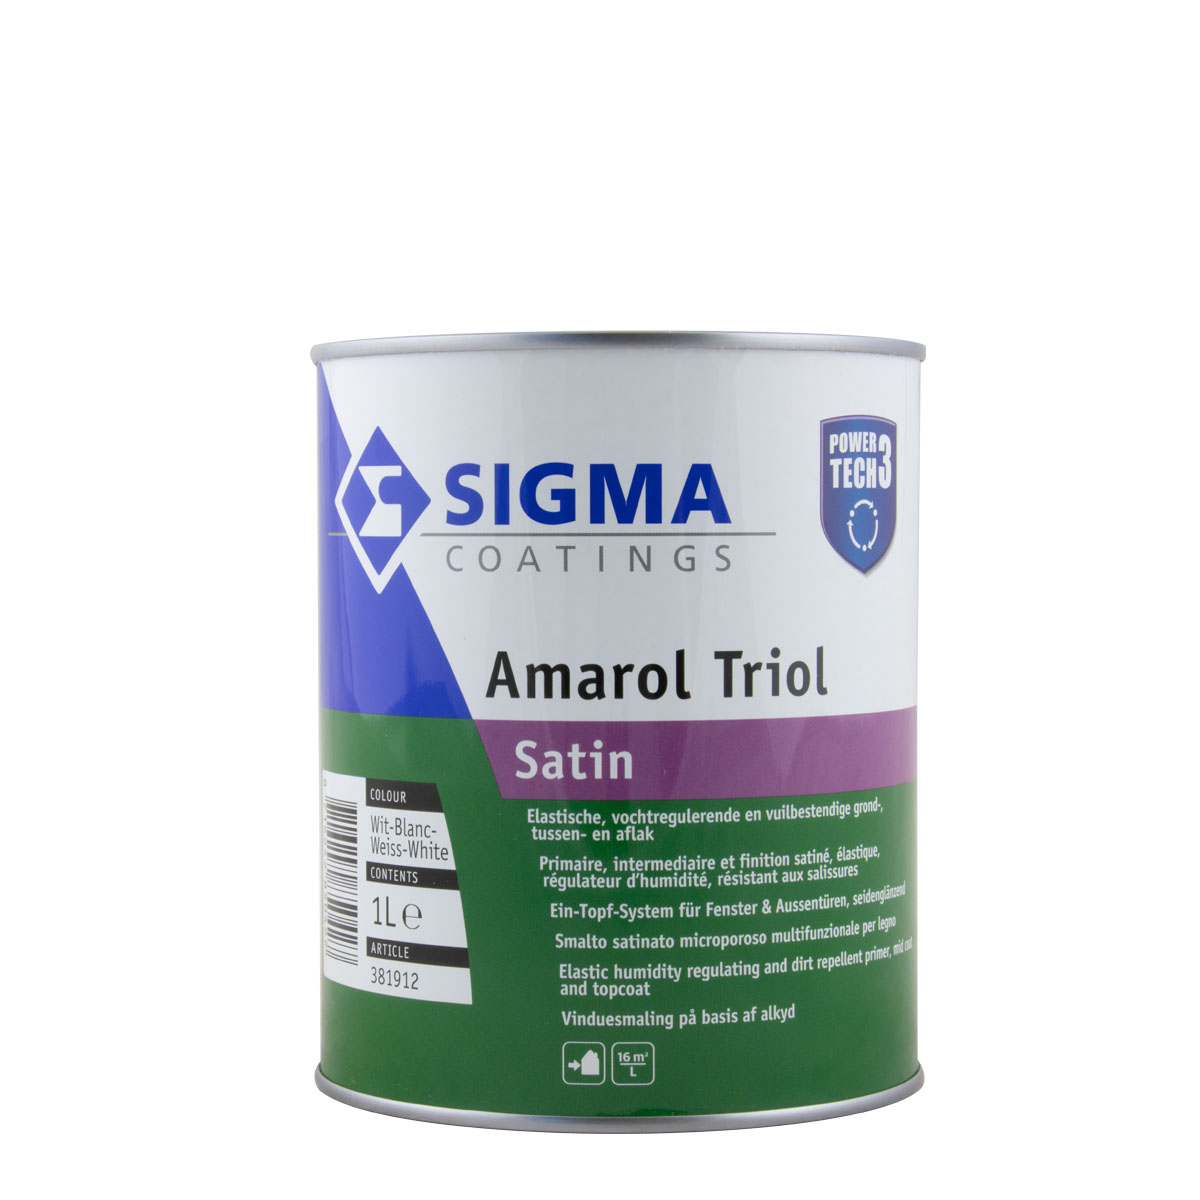 Sigma_coatings_Amarol_triol_satin_1l_gross